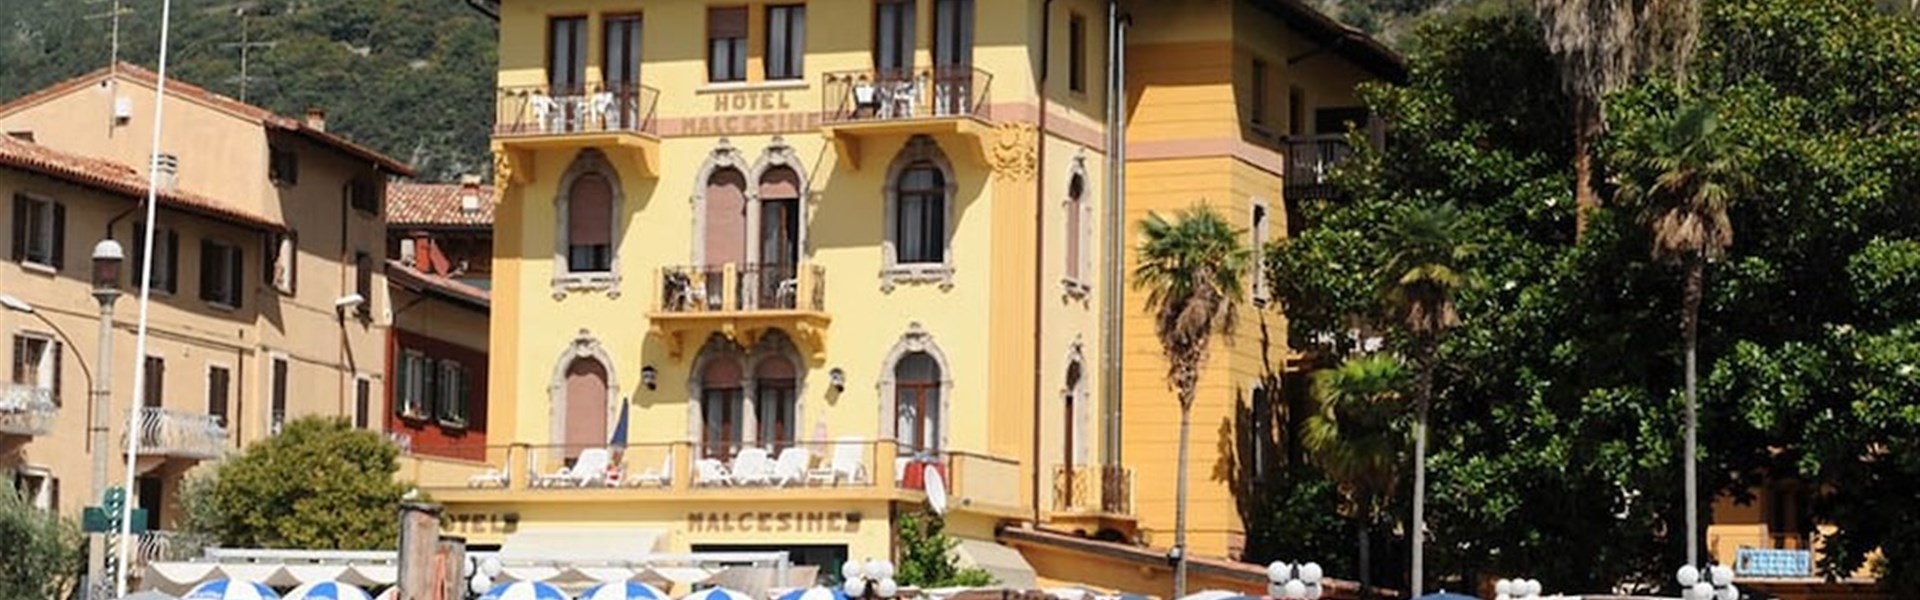 Hotel Malcesine - 